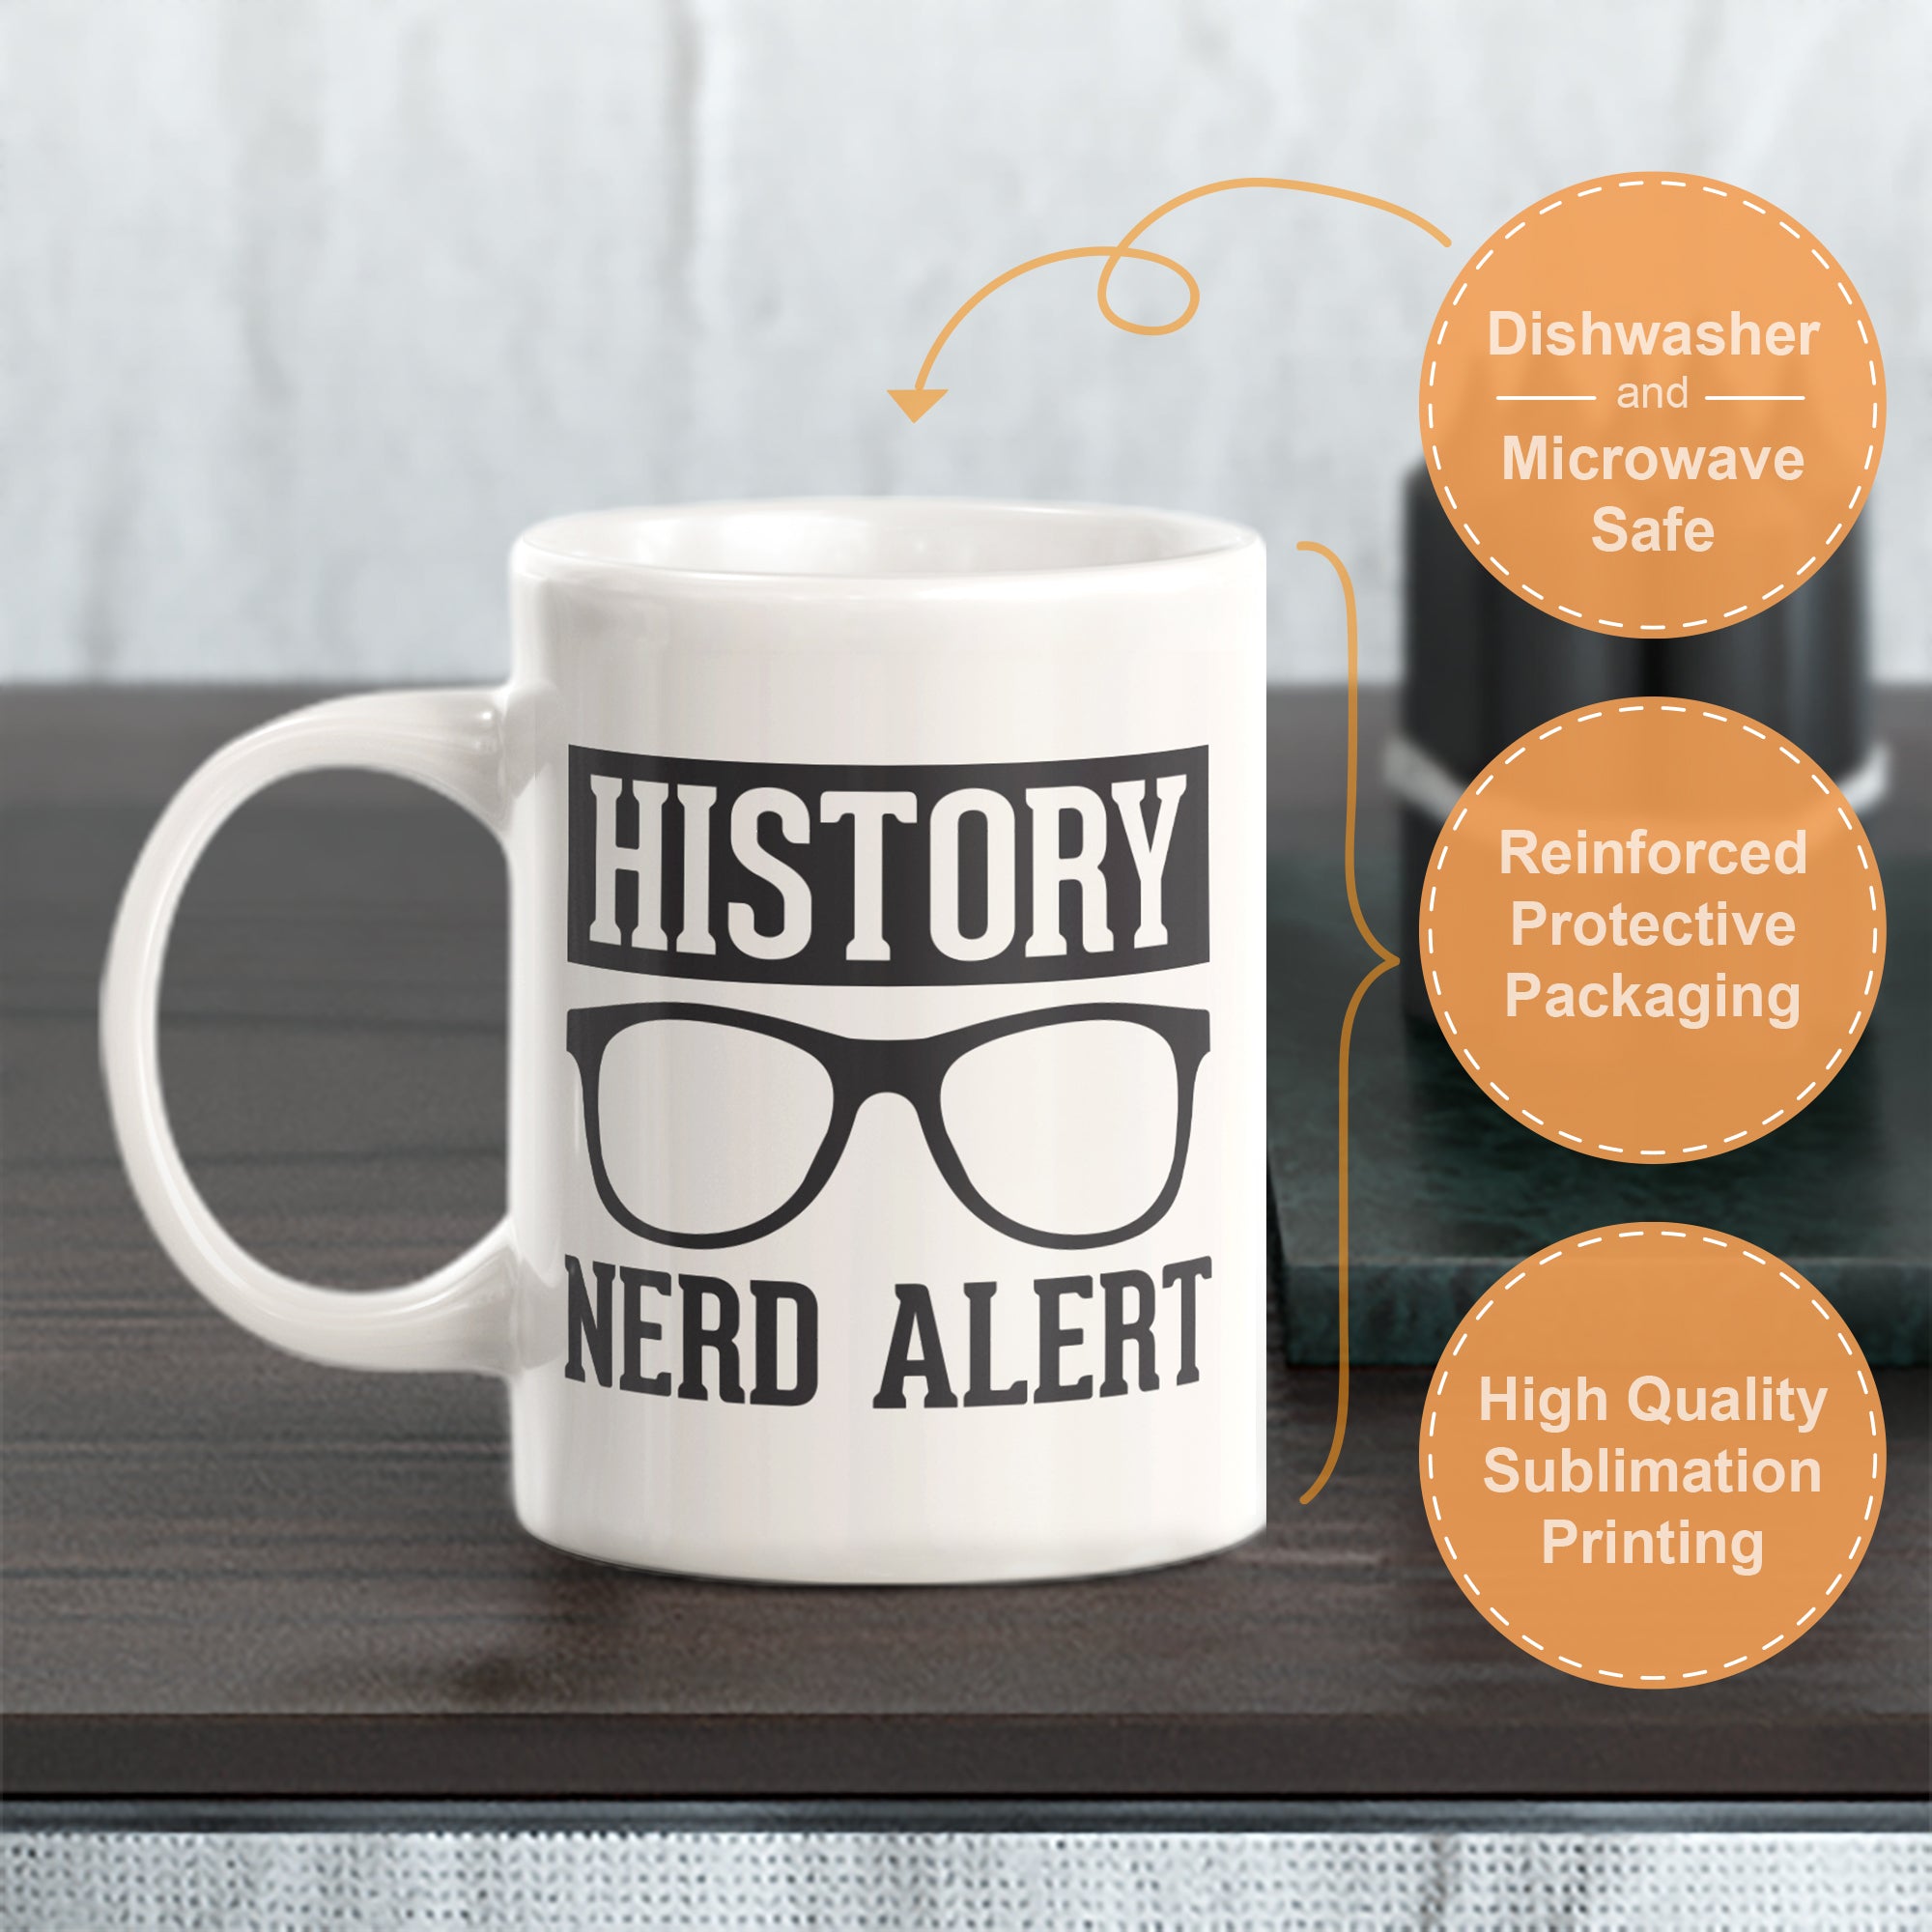 History Nerd Alert Coffee Mug